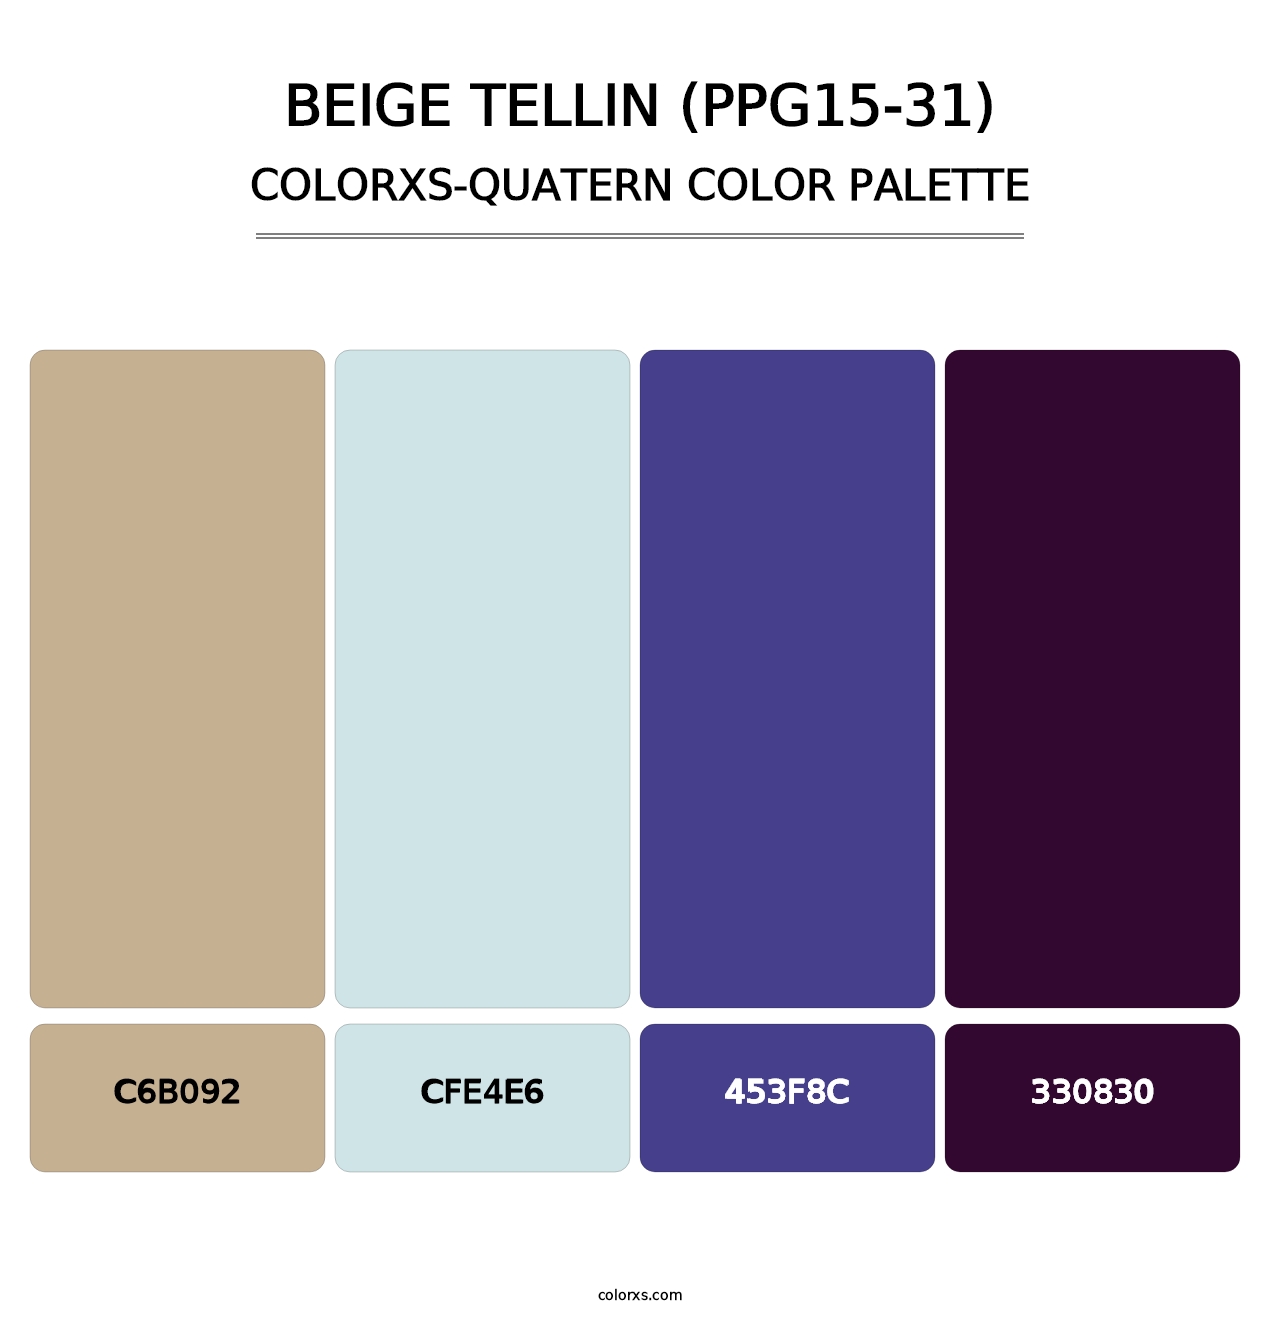 Beige Tellin (PPG15-31) - Colorxs Quatern Palette